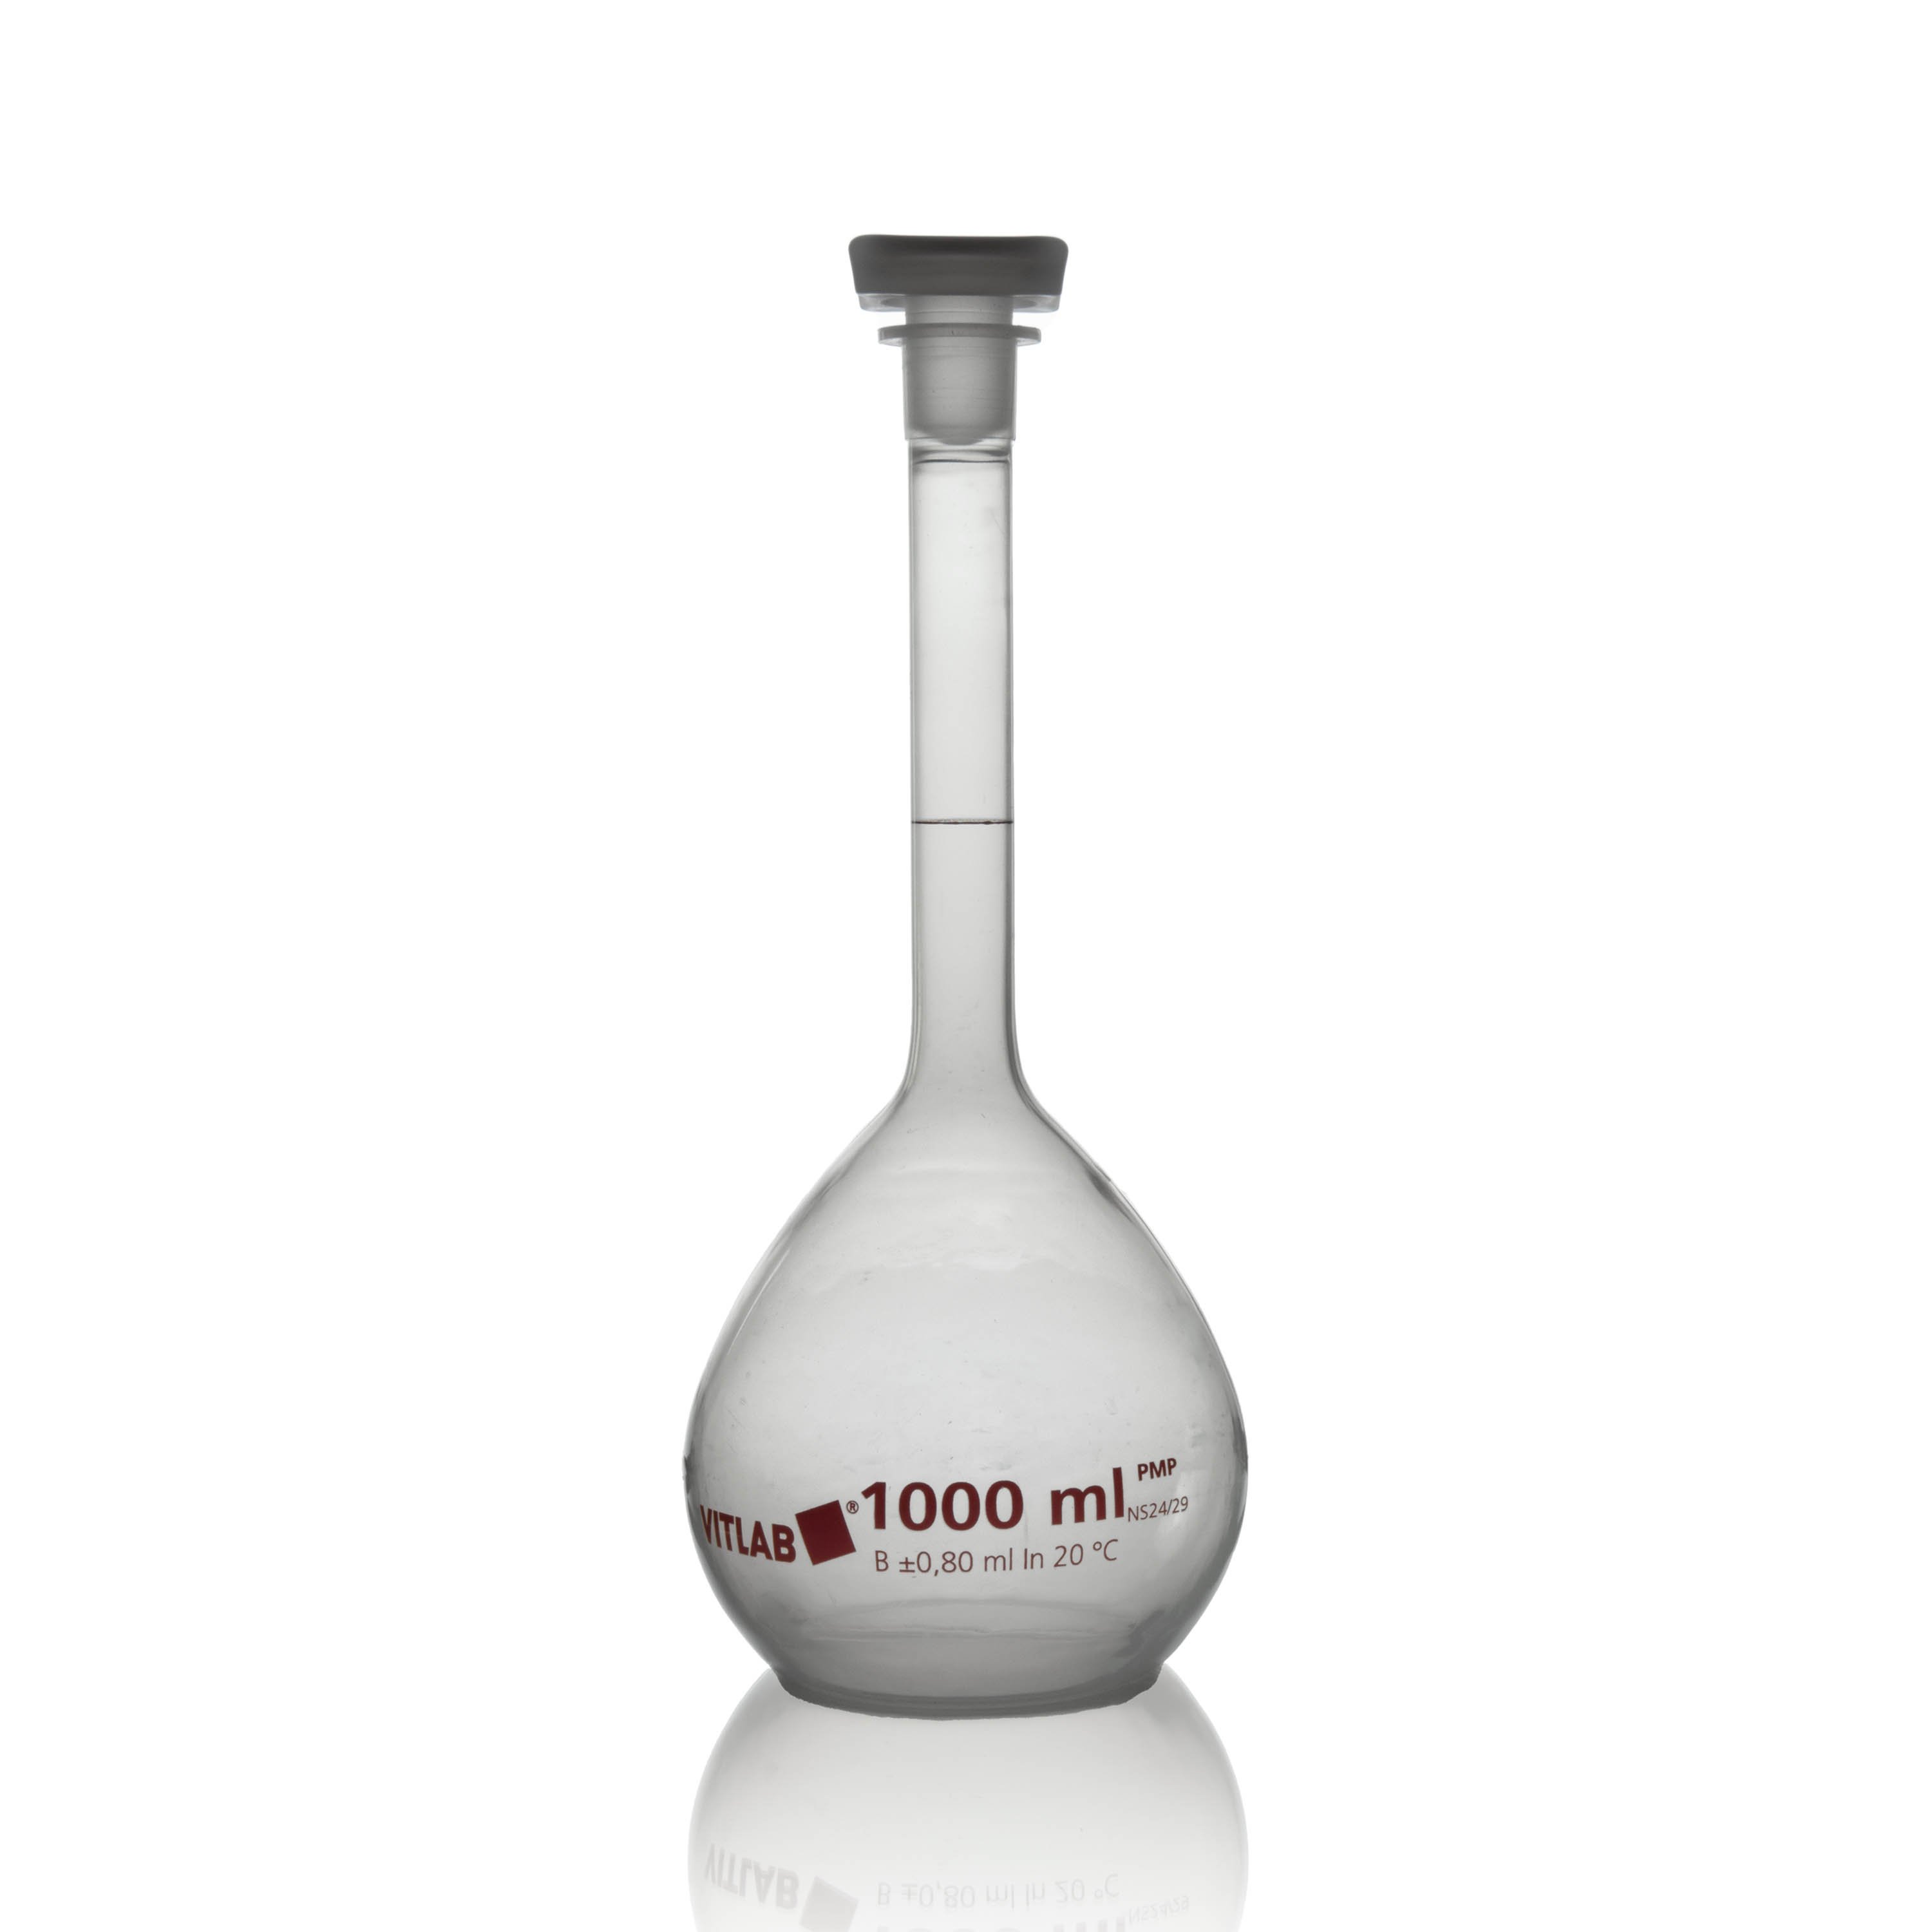 BrandTech Class B PMP Volumetric Flask with Polypropylene NS Stopper - 1000mL (Pack of 1)